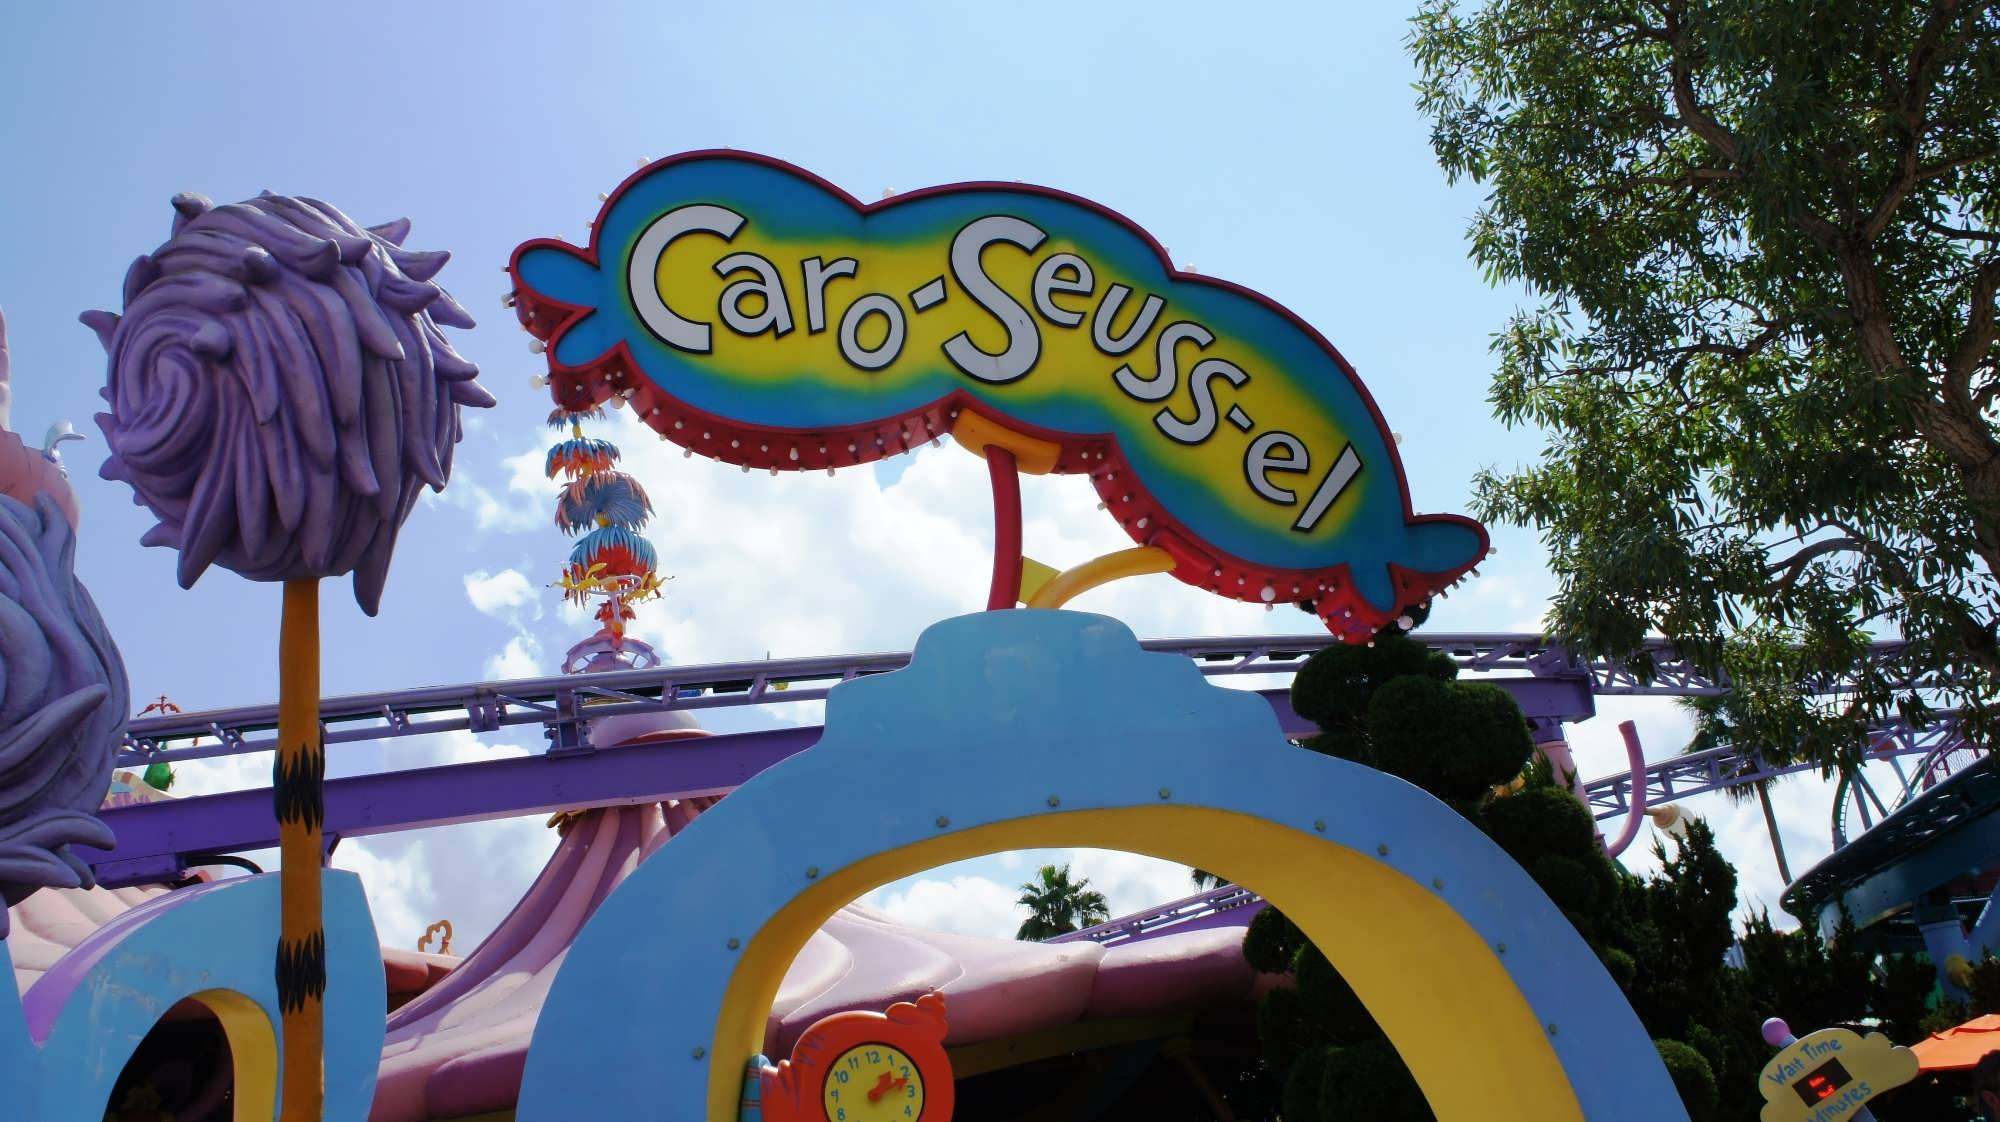 Caro-Seuss-el at Universal's Islands of Adventure